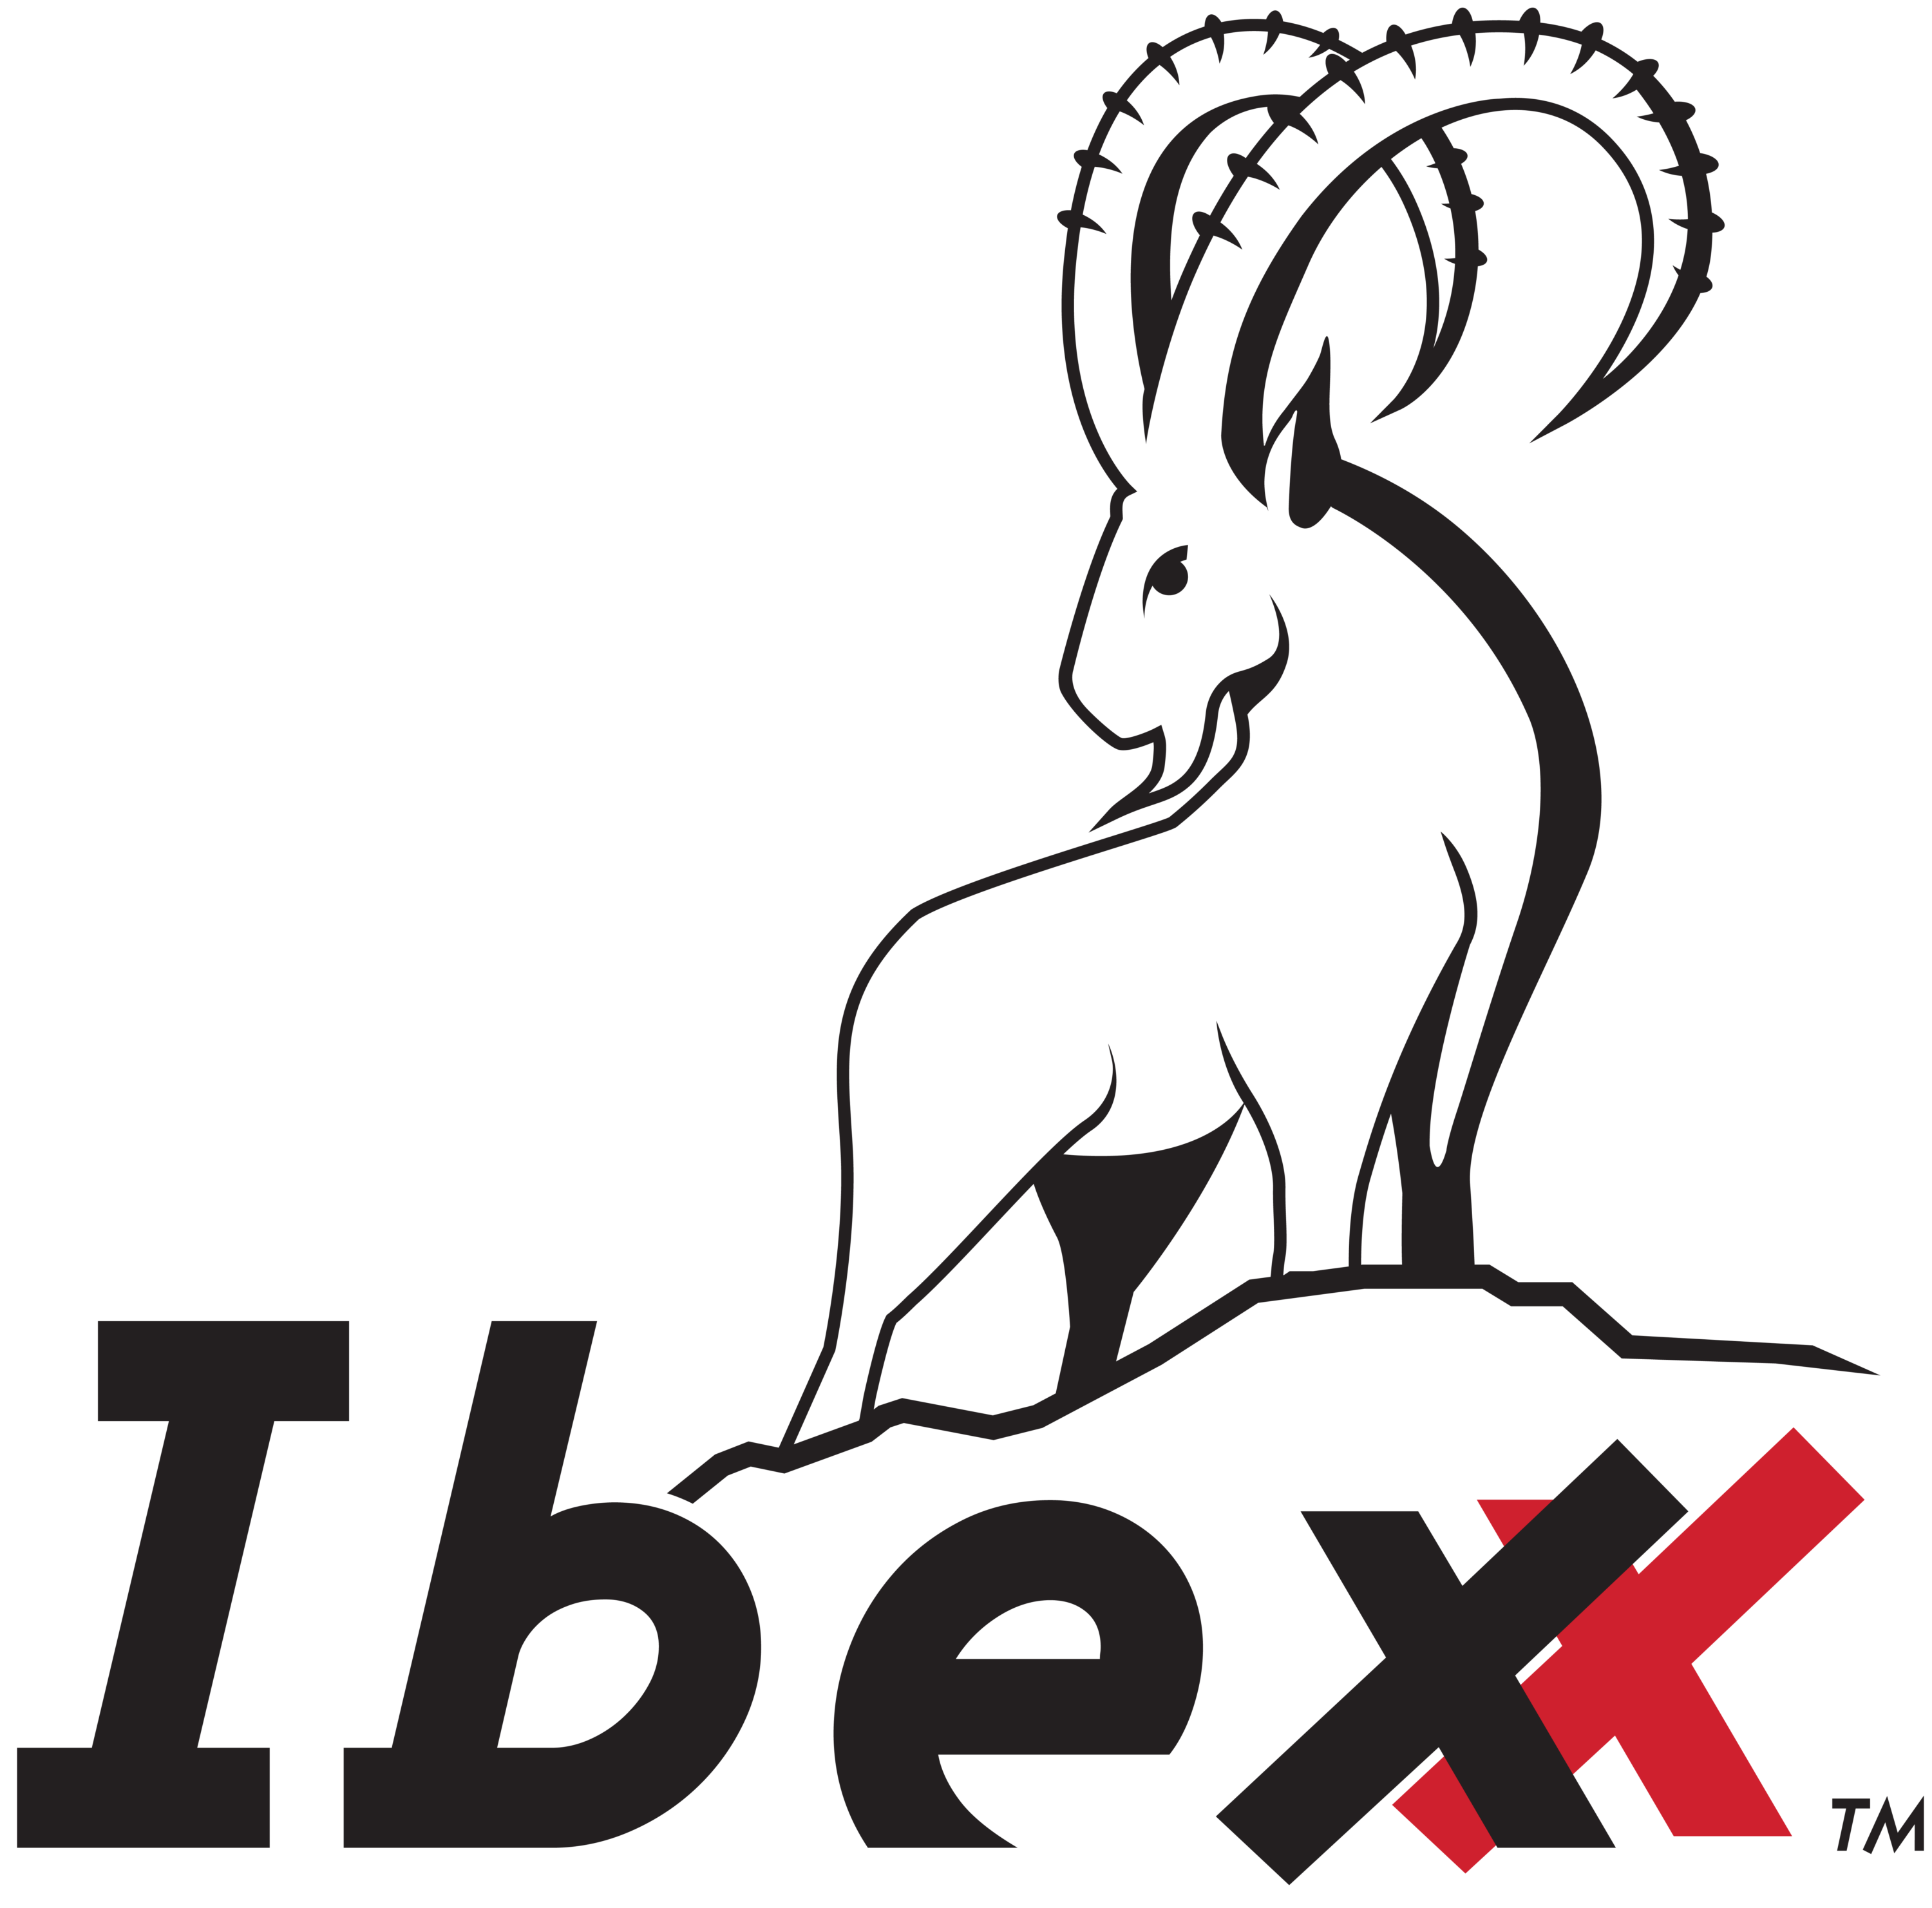 Boise Off-Road & Outdoor Expo vendor Ibexx logo